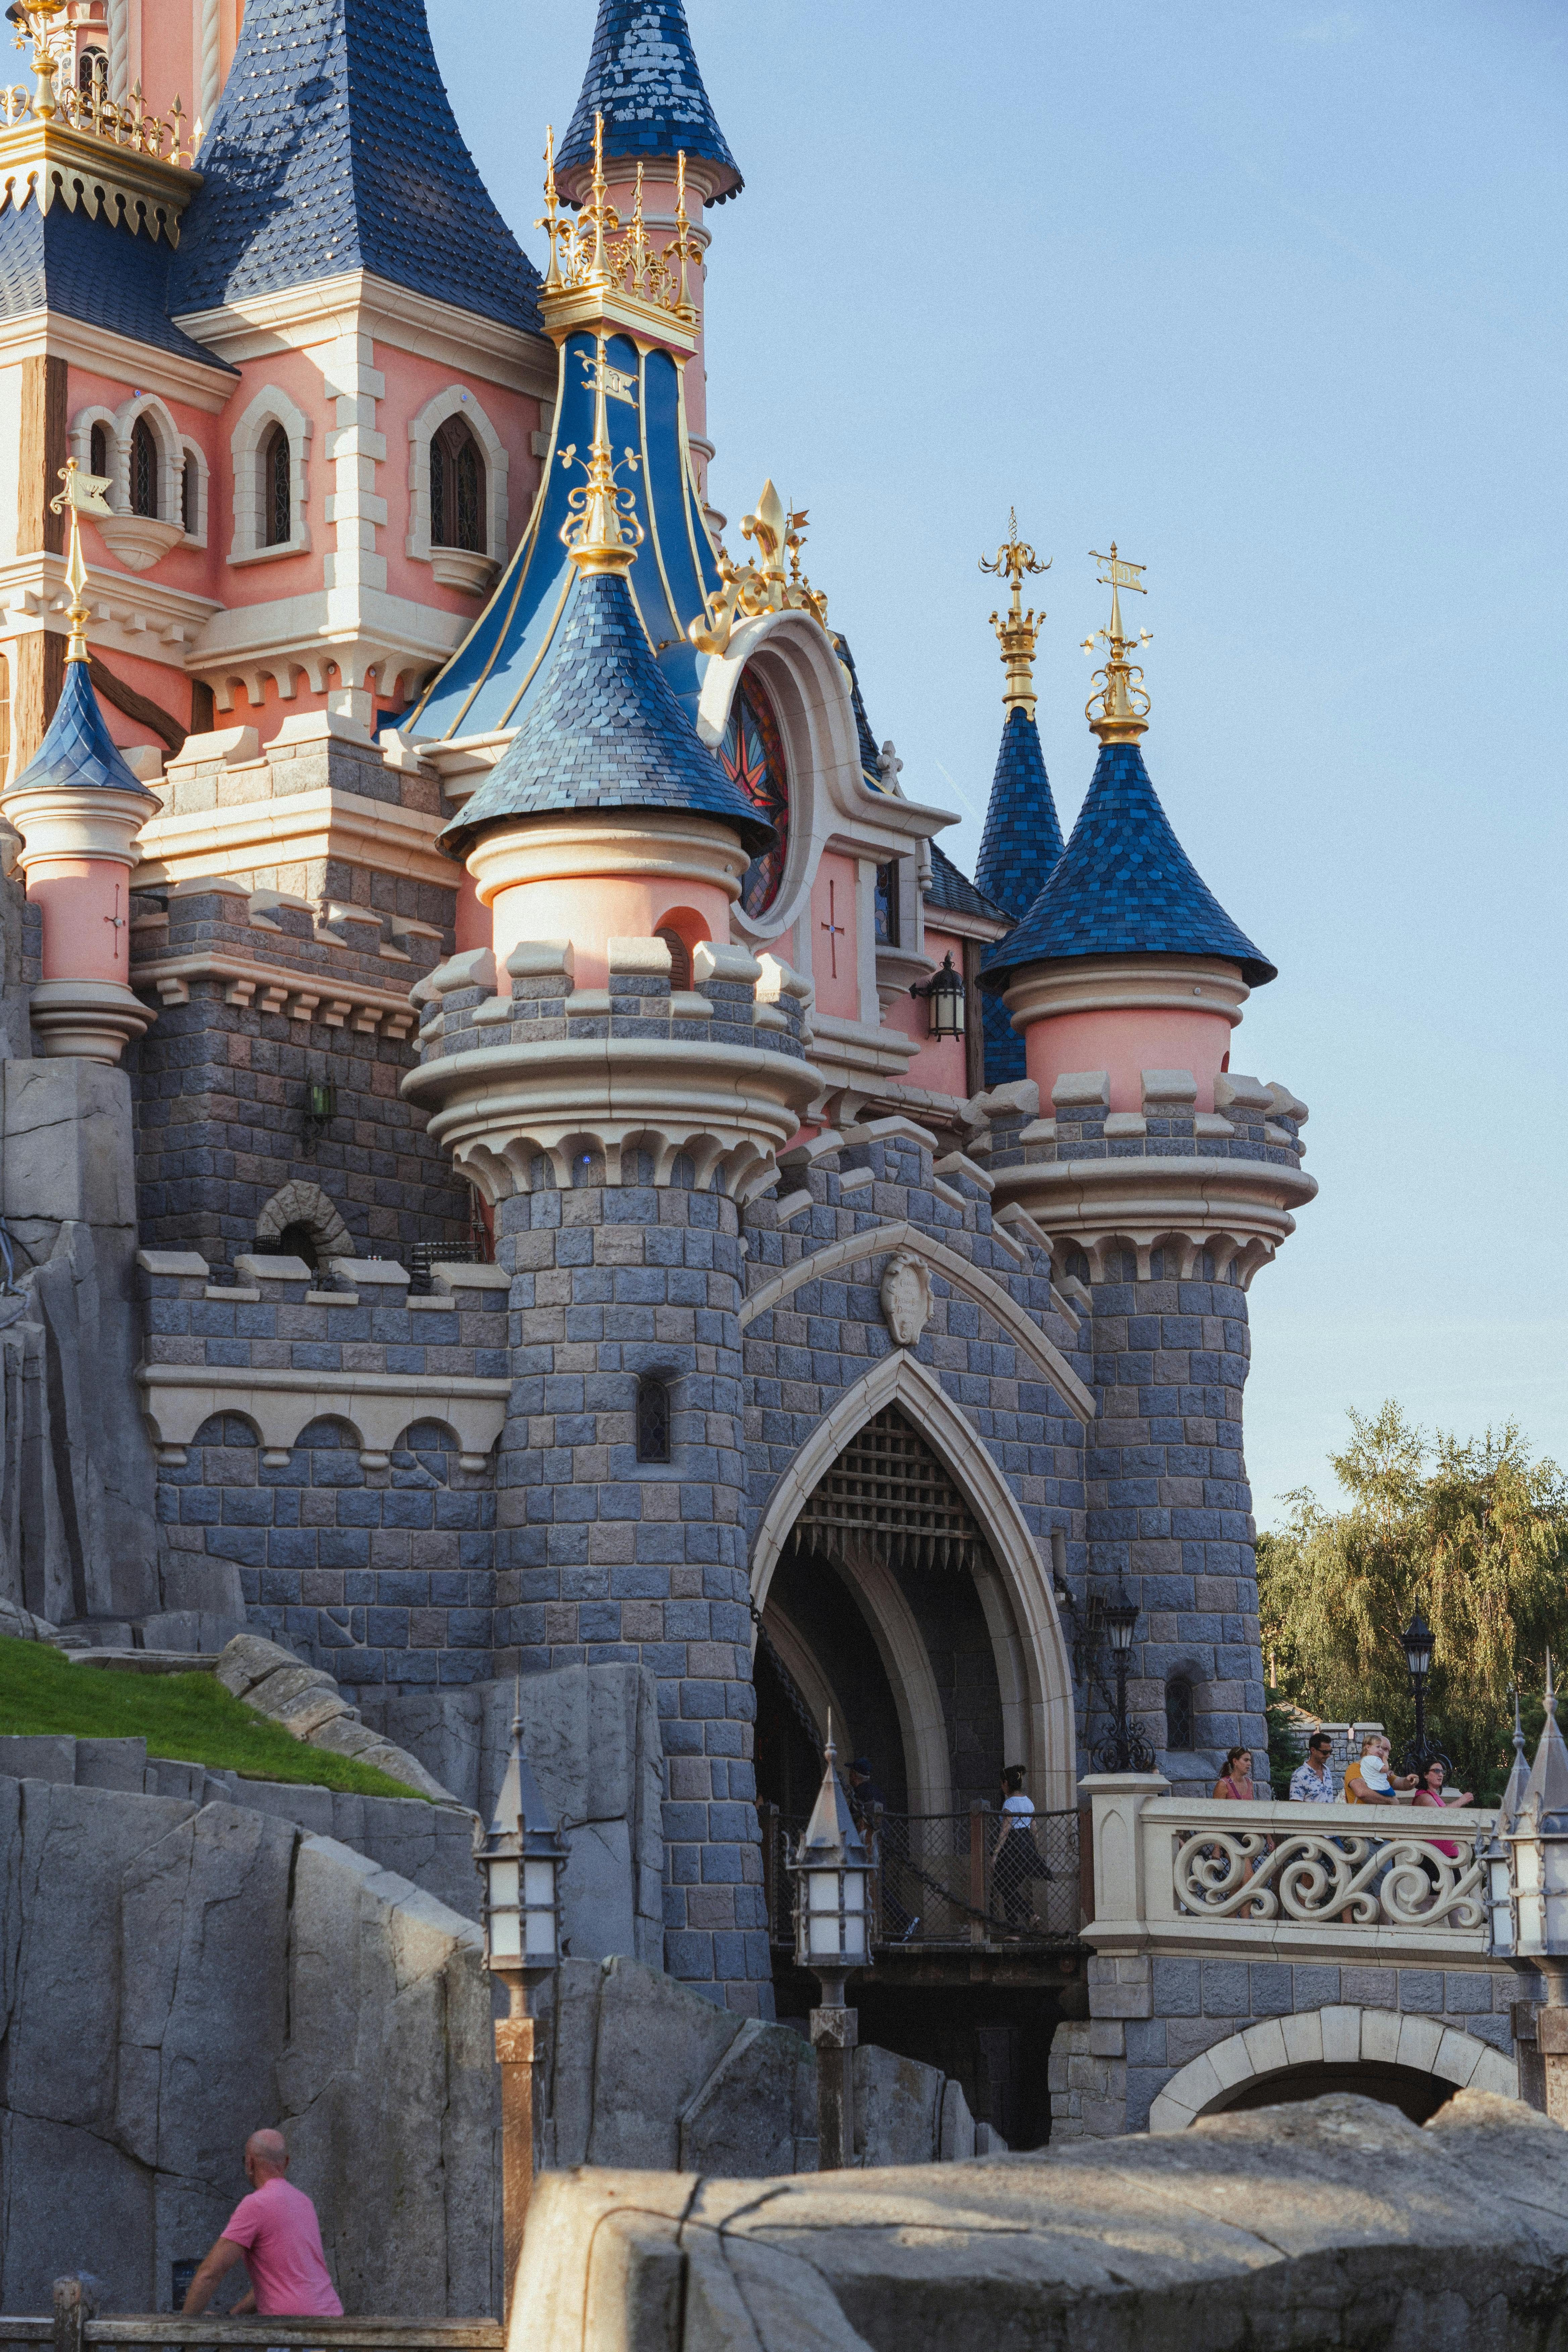 Castle Disneyland Paris HD wallpaper